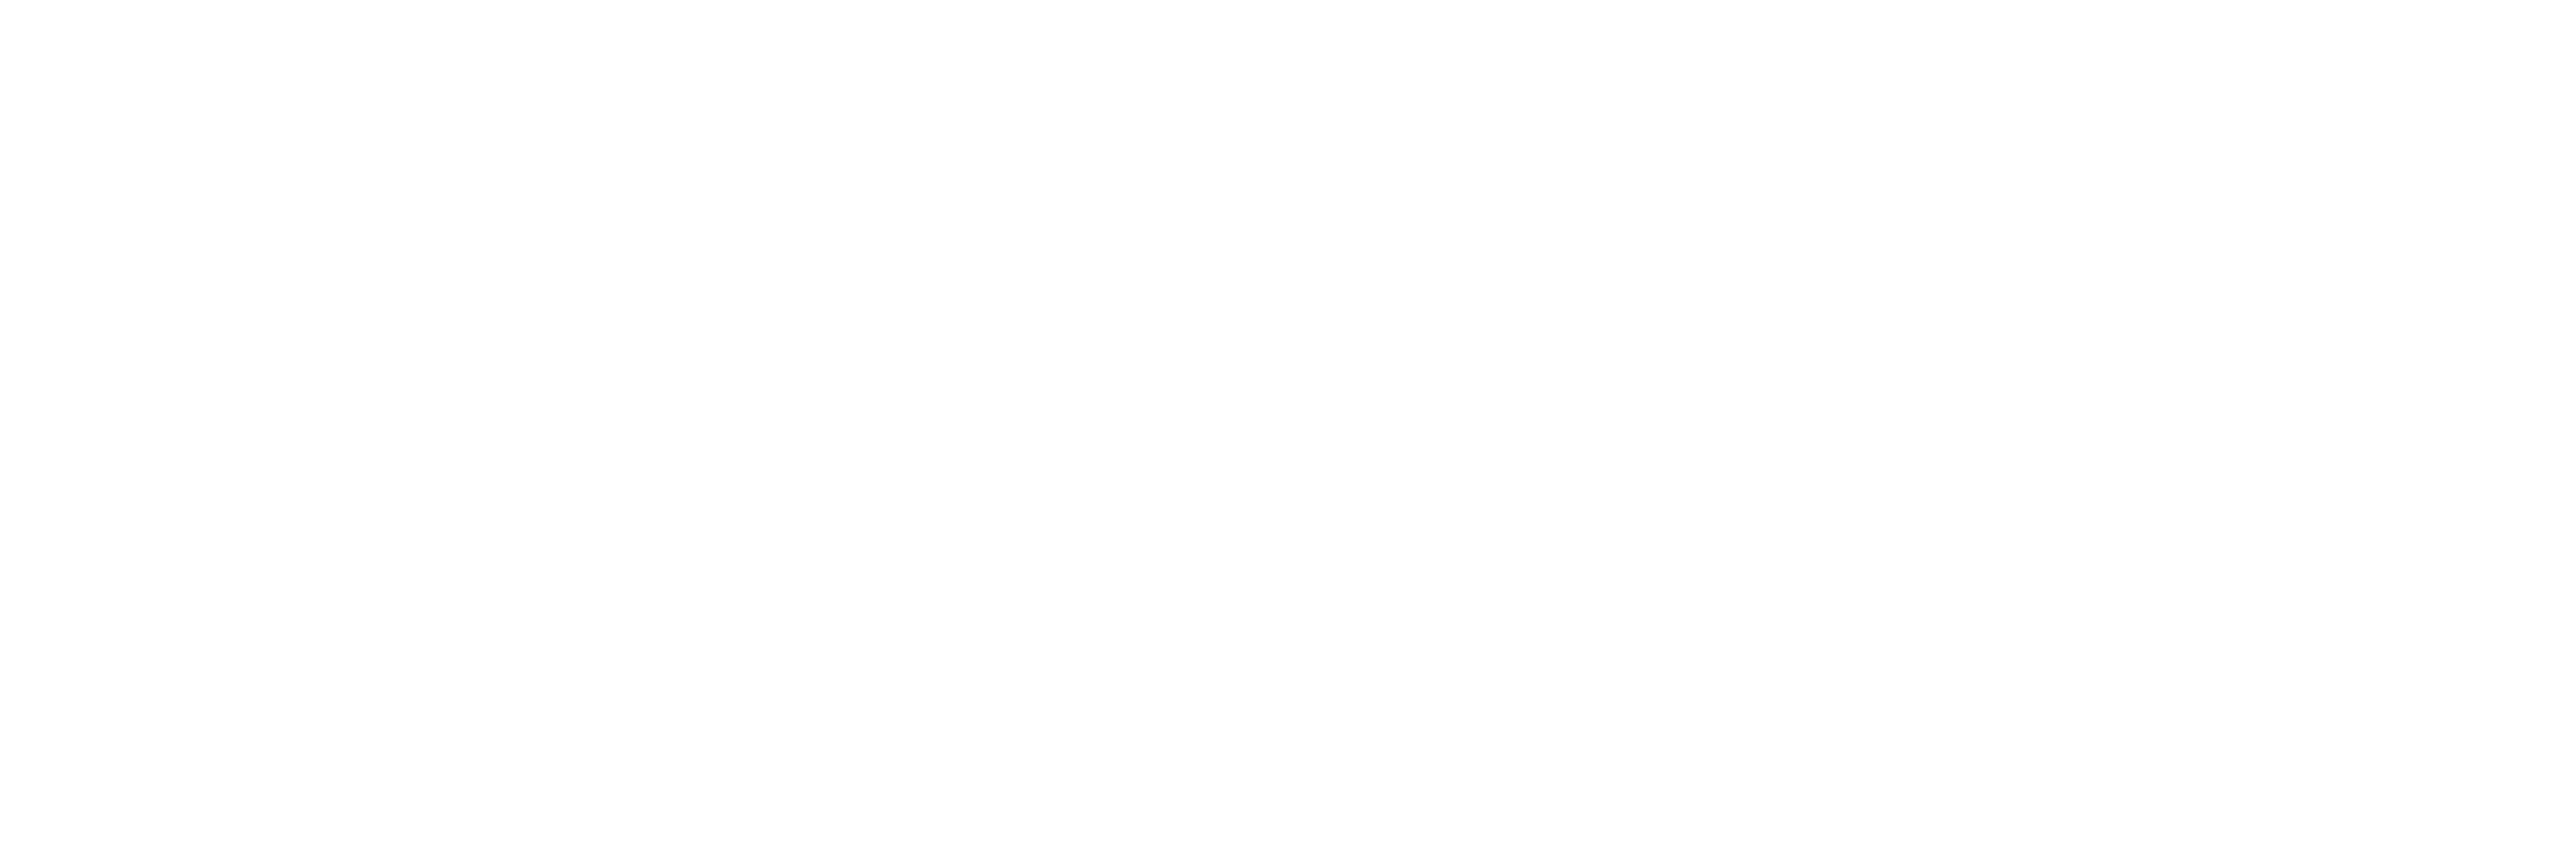 Radeon GPU Analyzer